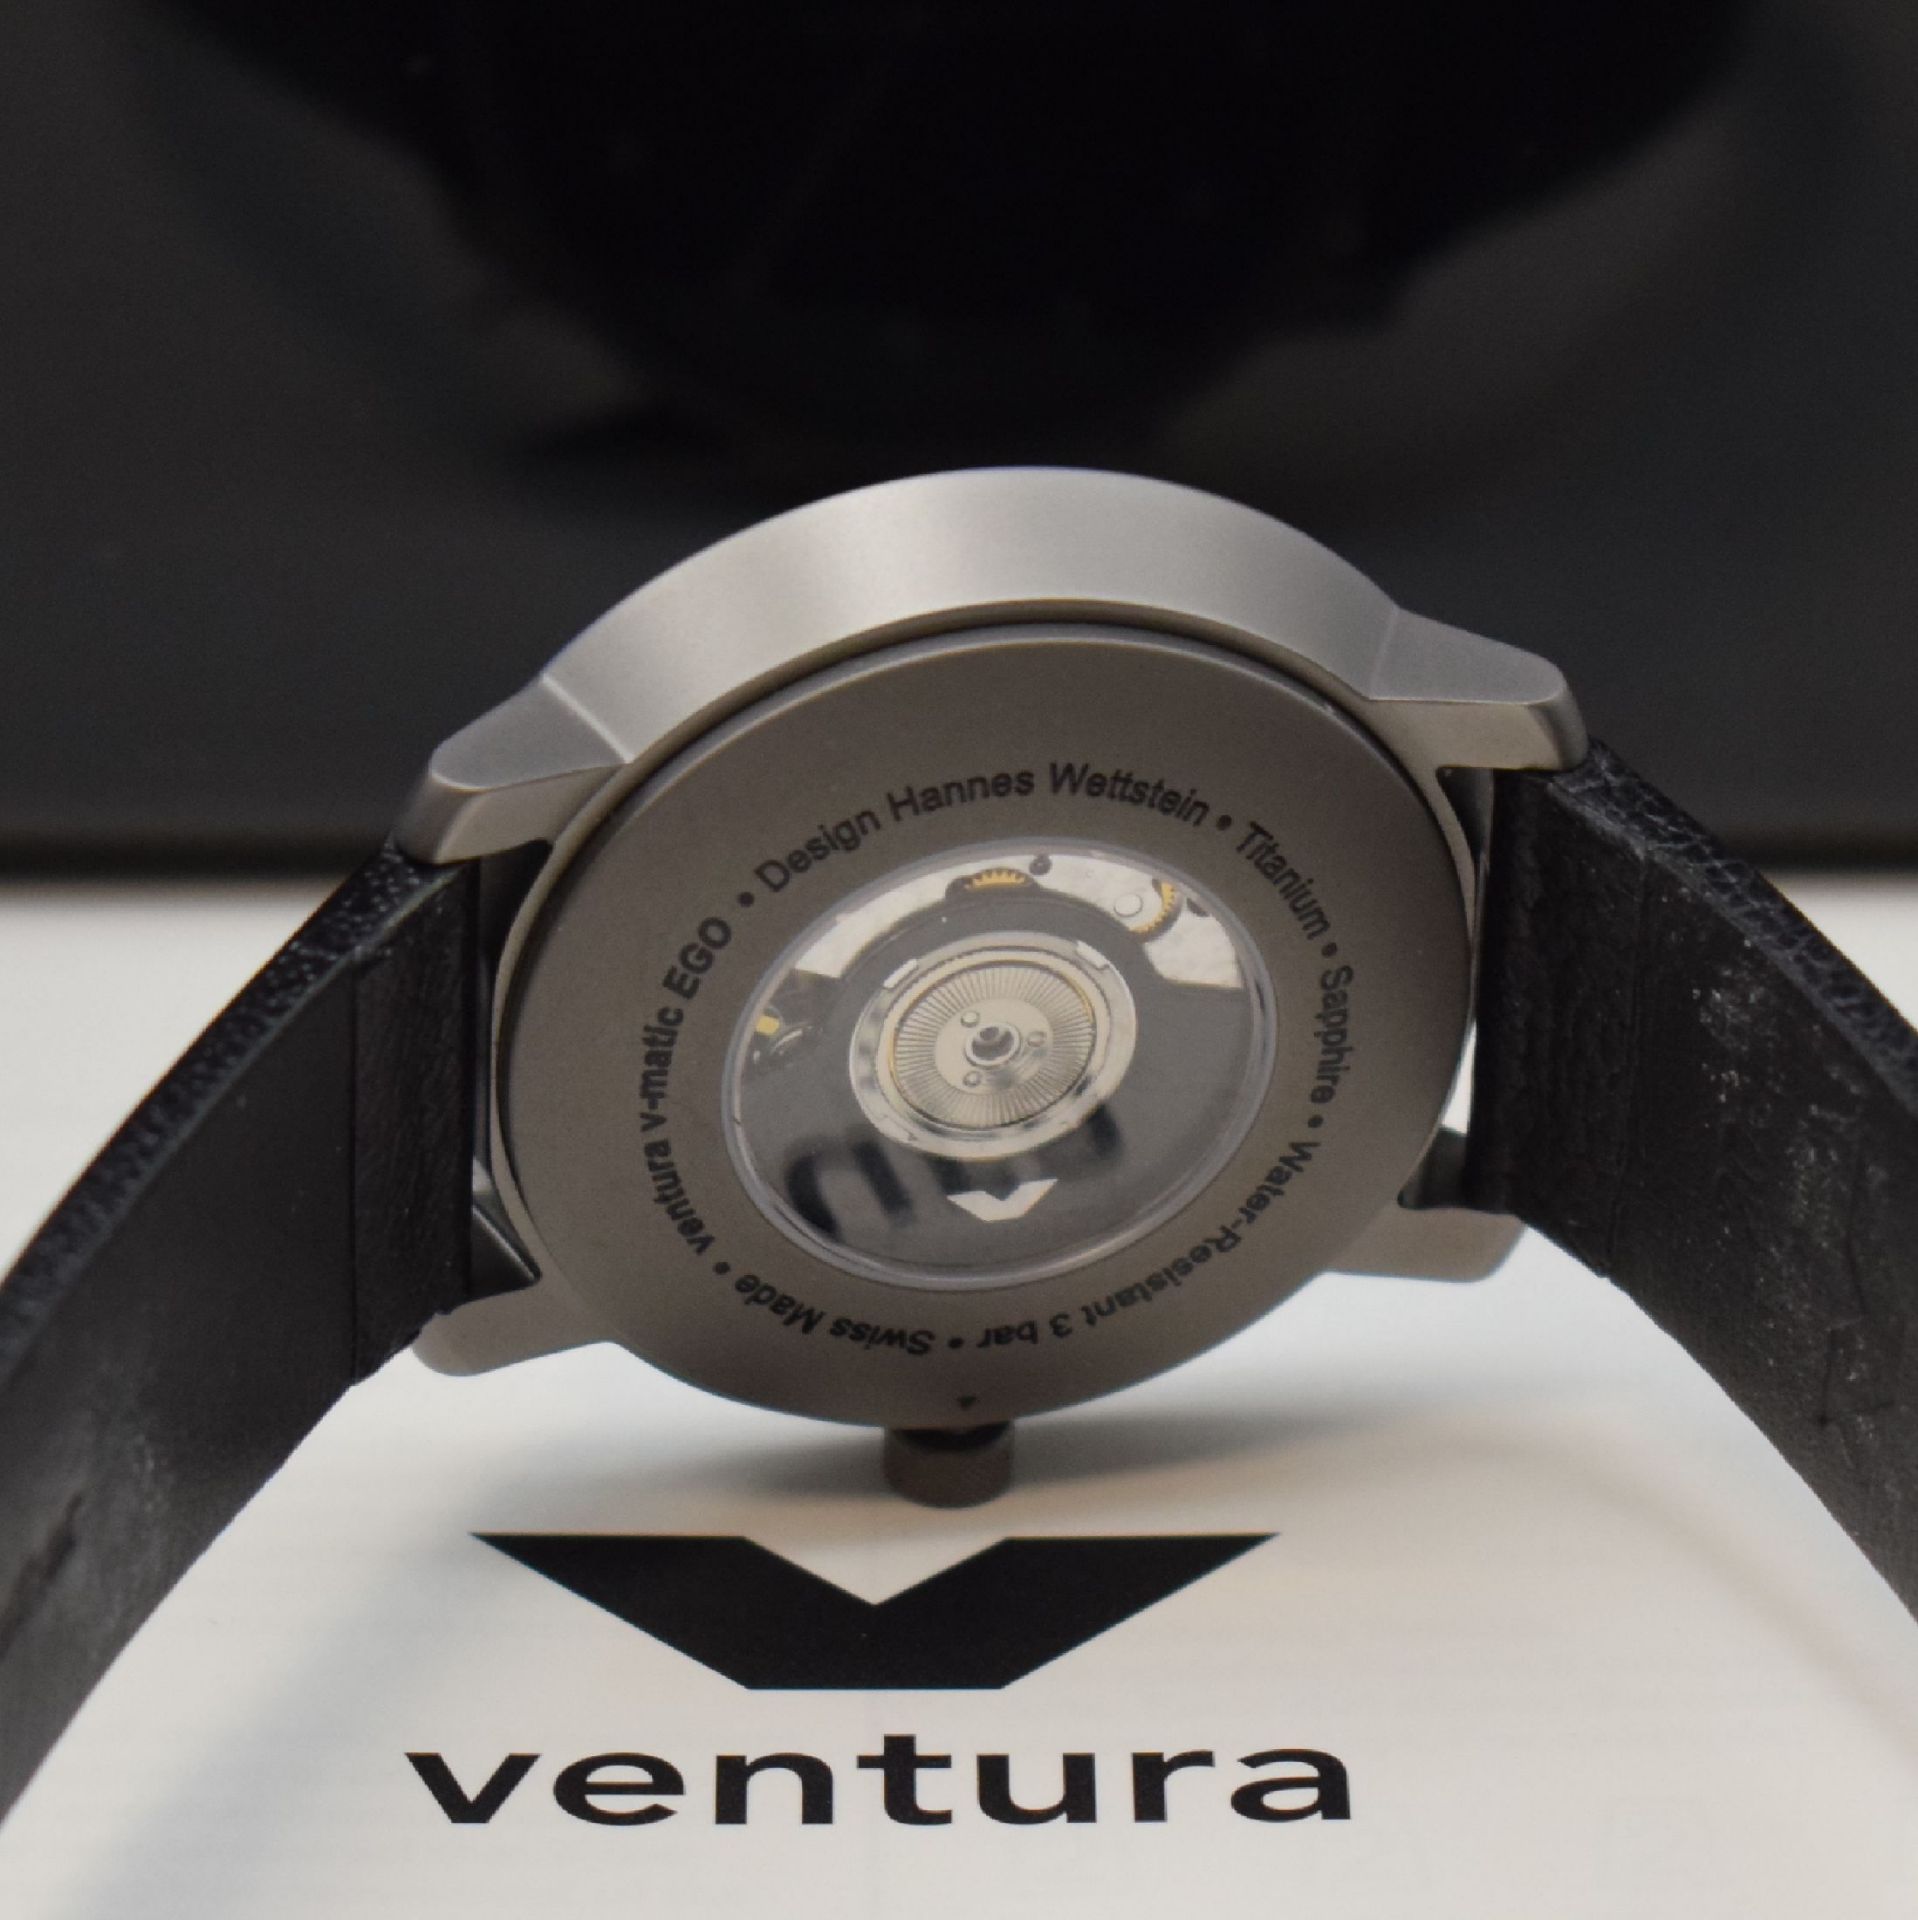 VENTURA / Hannes Wettstein Design-Armbanduhr in Titan, - Image 5 of 5